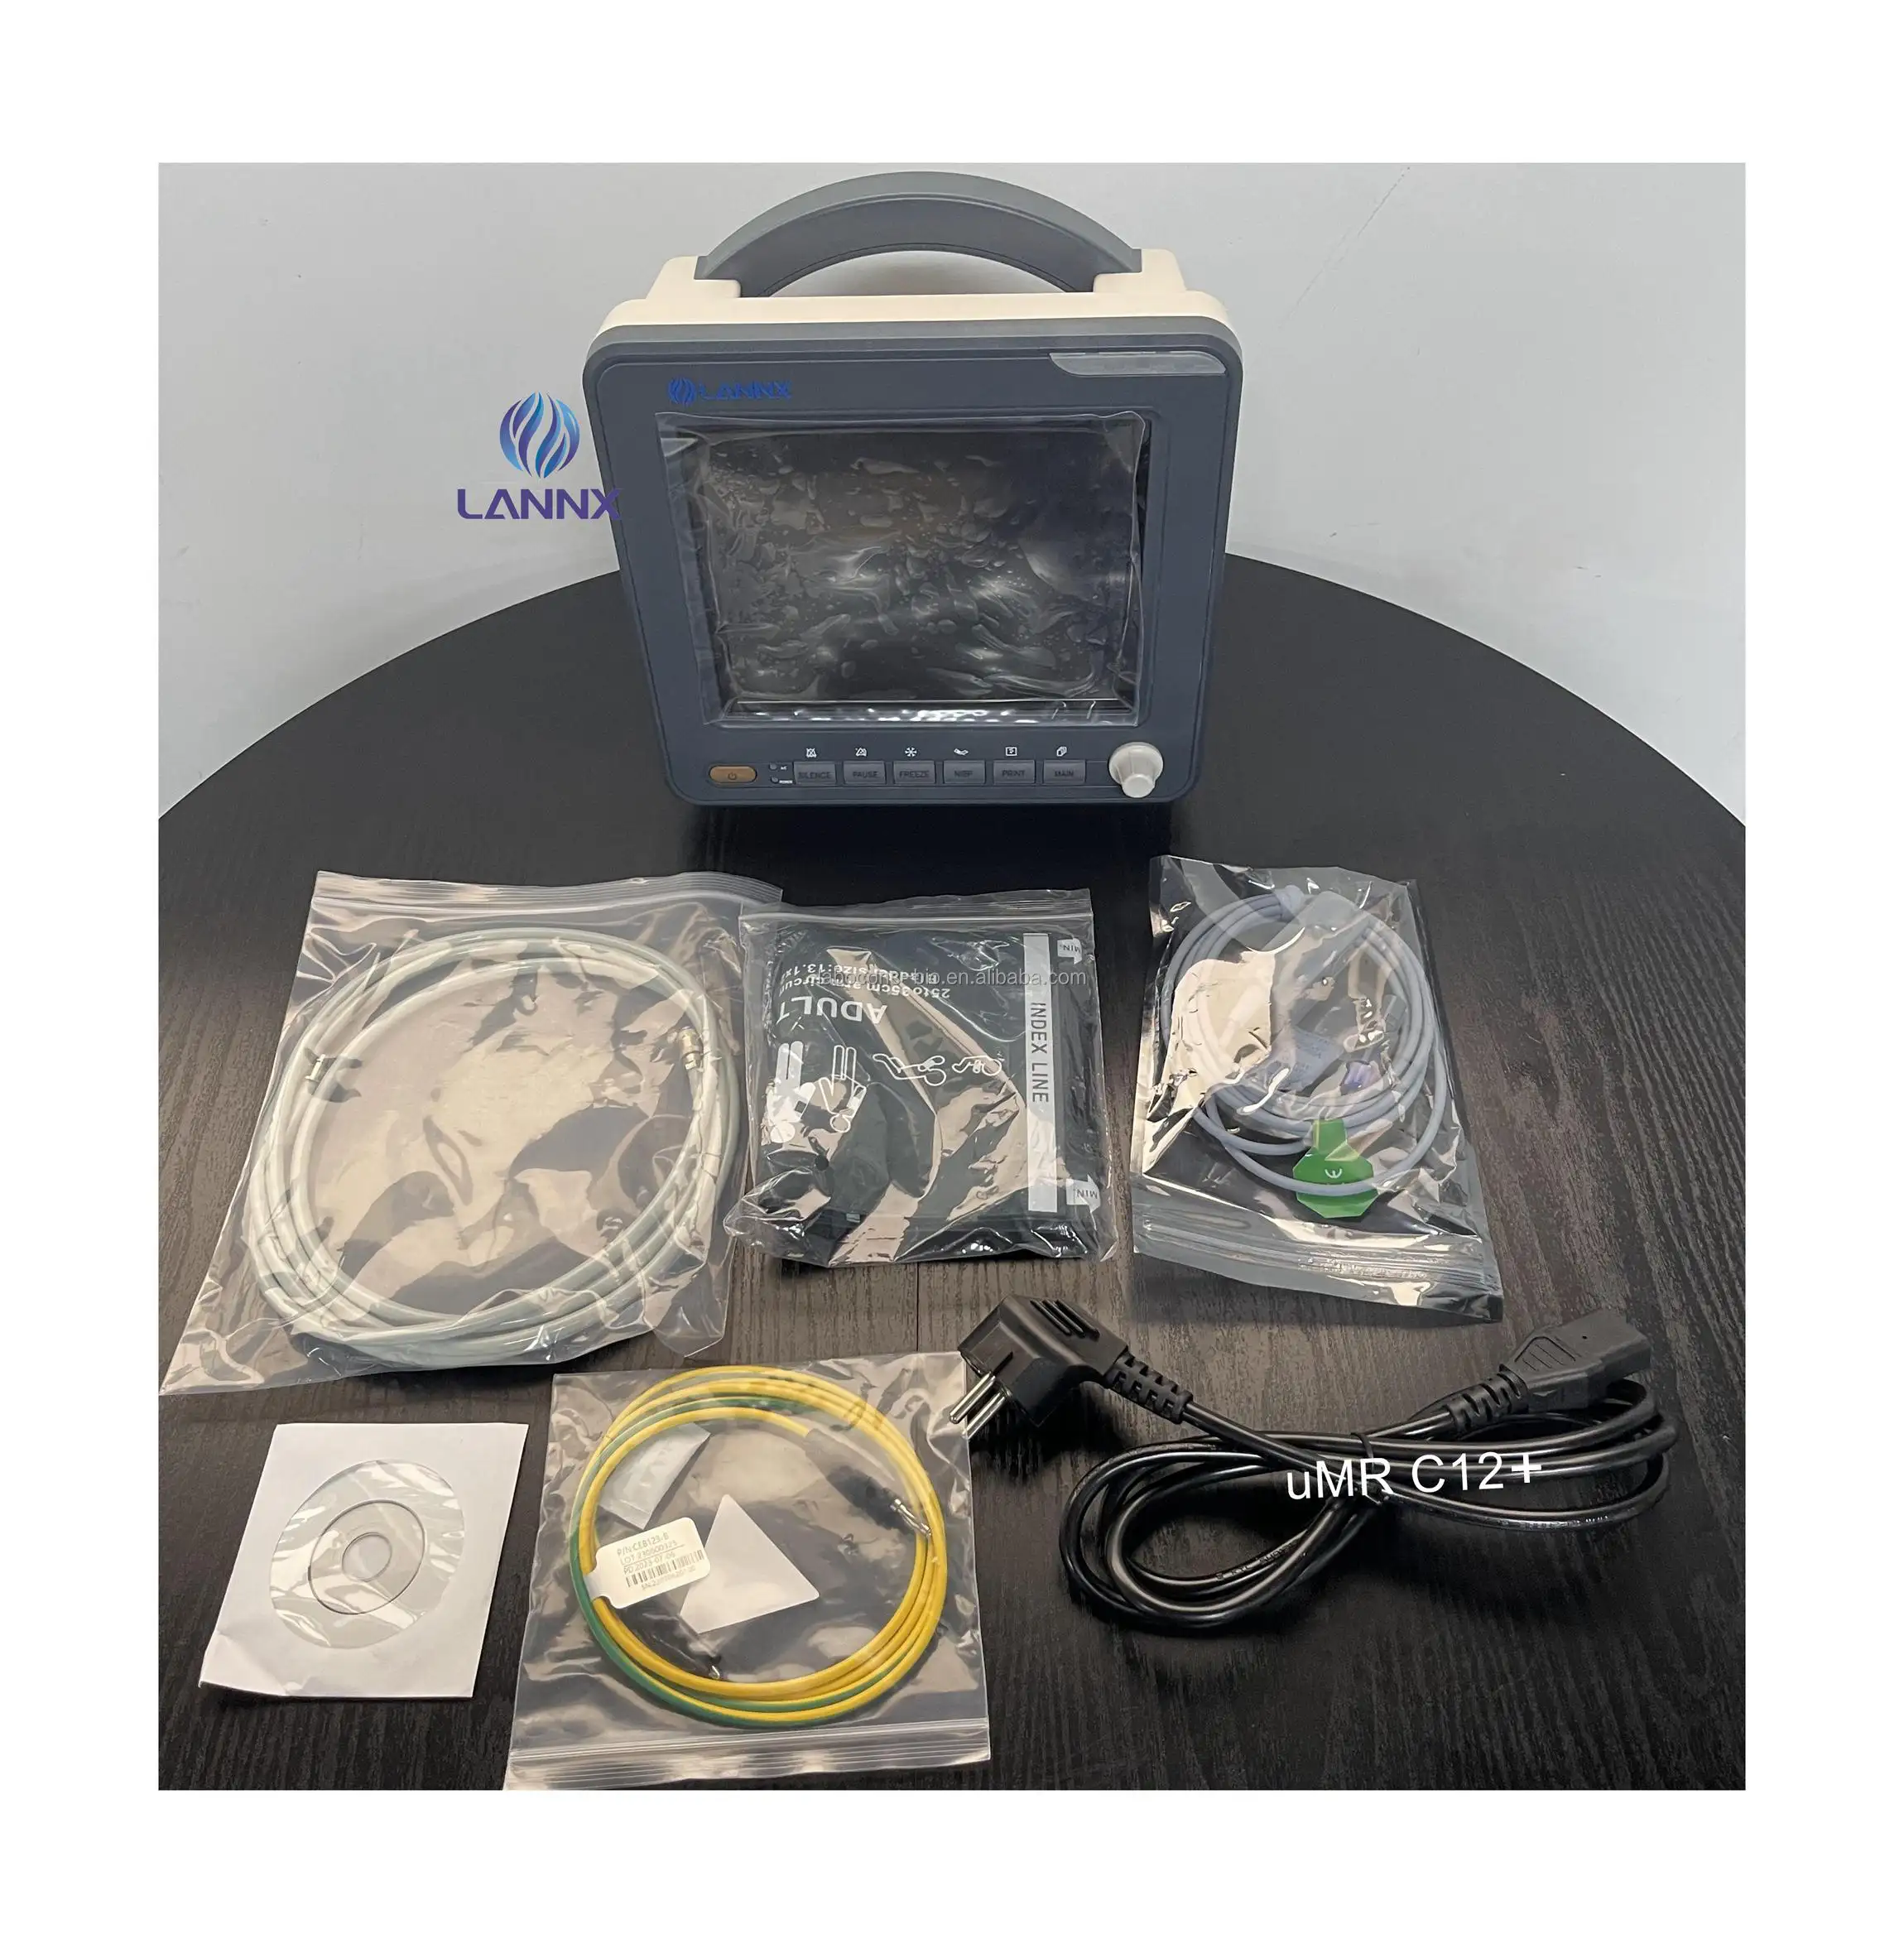 Lanx UMR C12+ Monitor de sinais vitais portátil multiparâmetro médico inteligente TFT de 8 polegadas pode remover dispositivos de monitoramento de pacientes